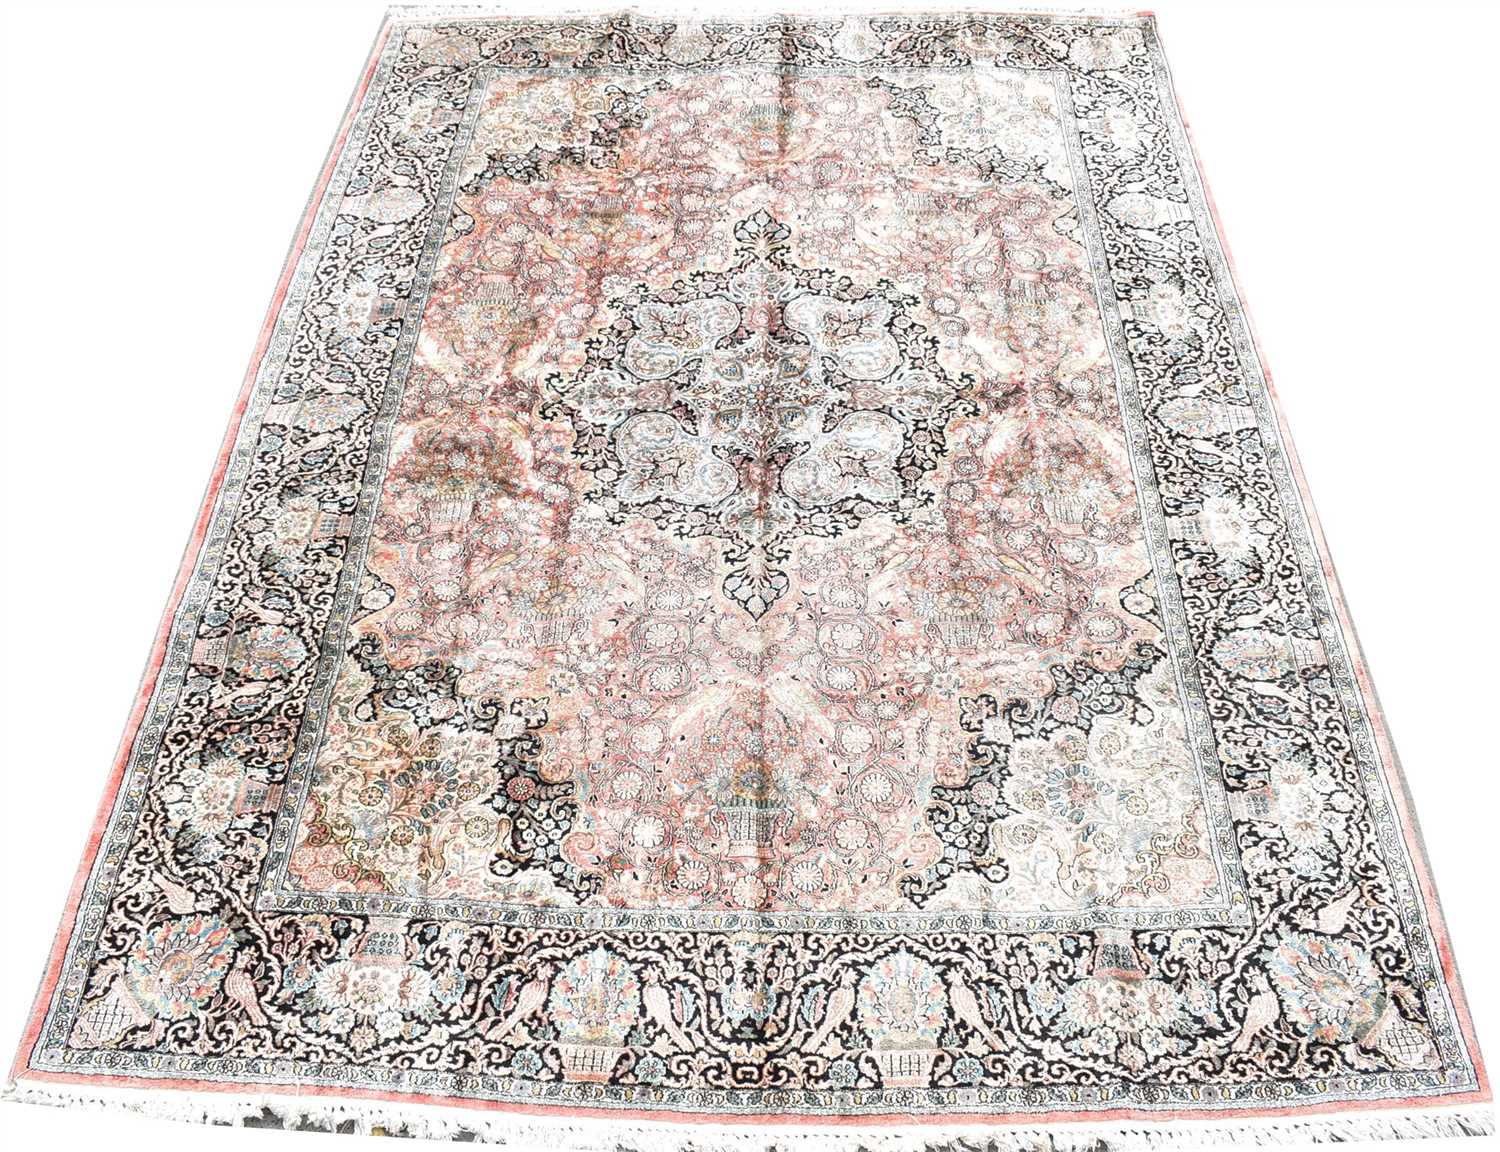 Lot 634 - Silk carpet